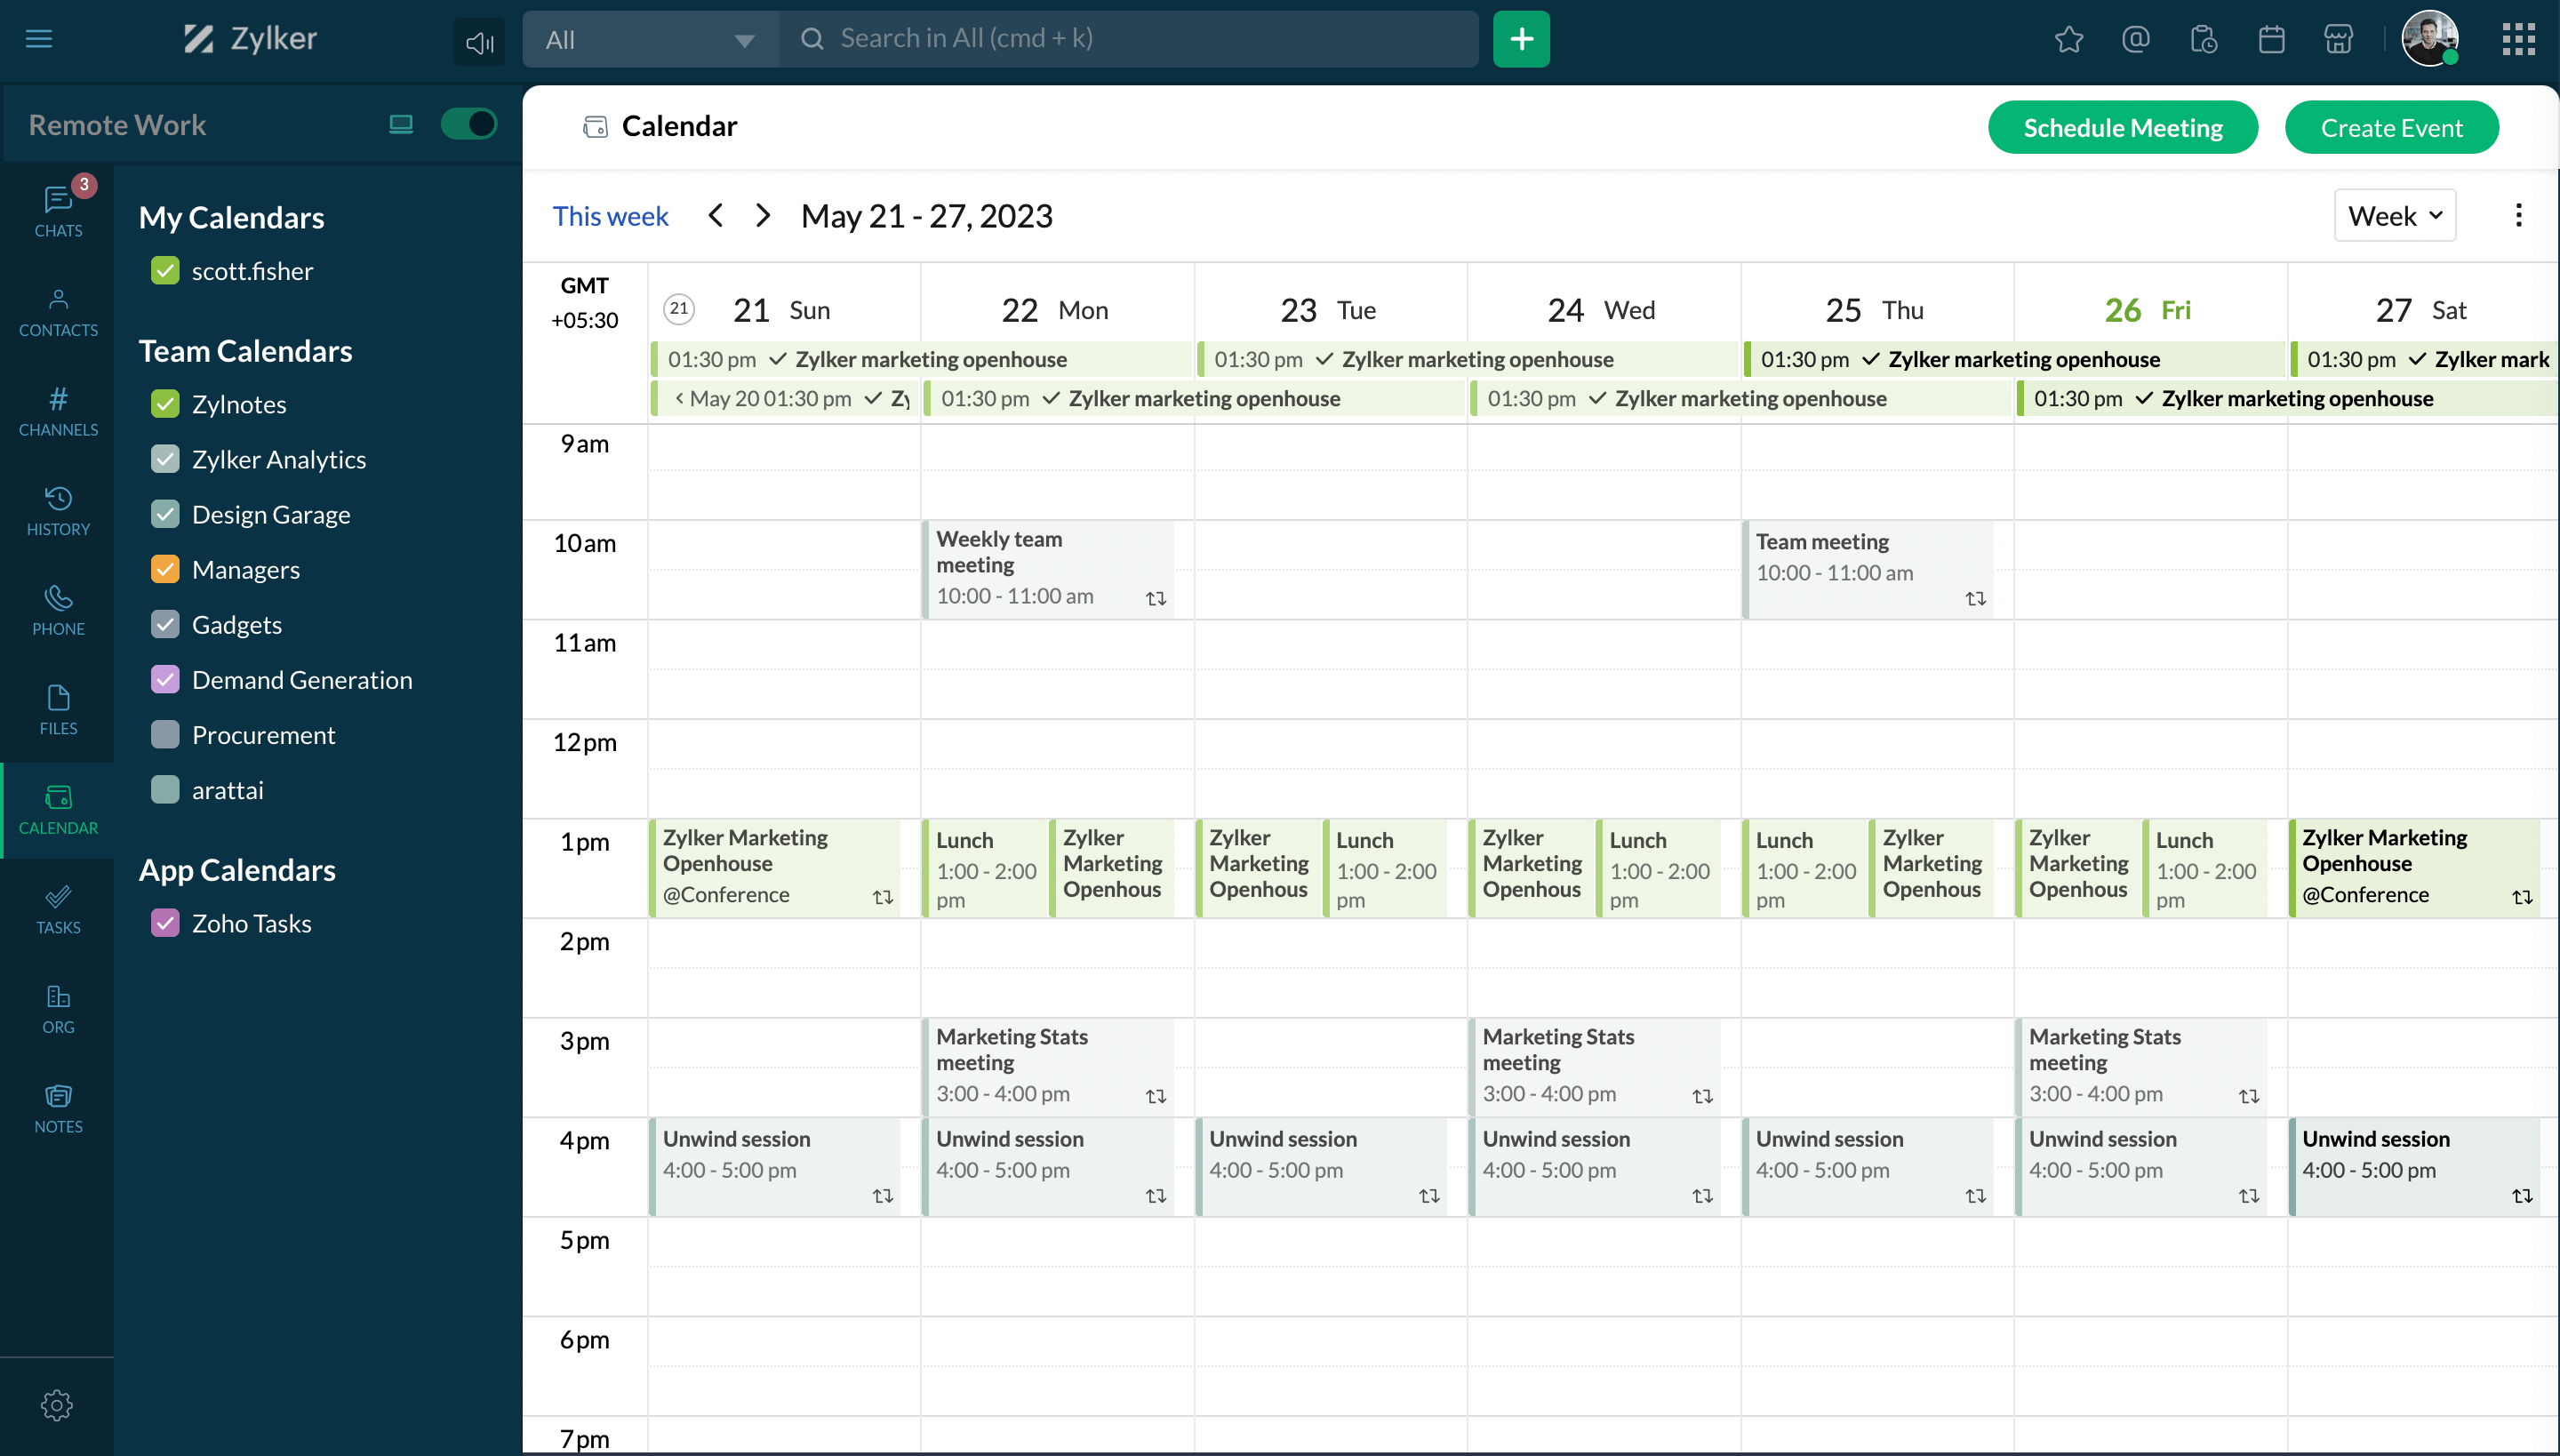 View all Calendars